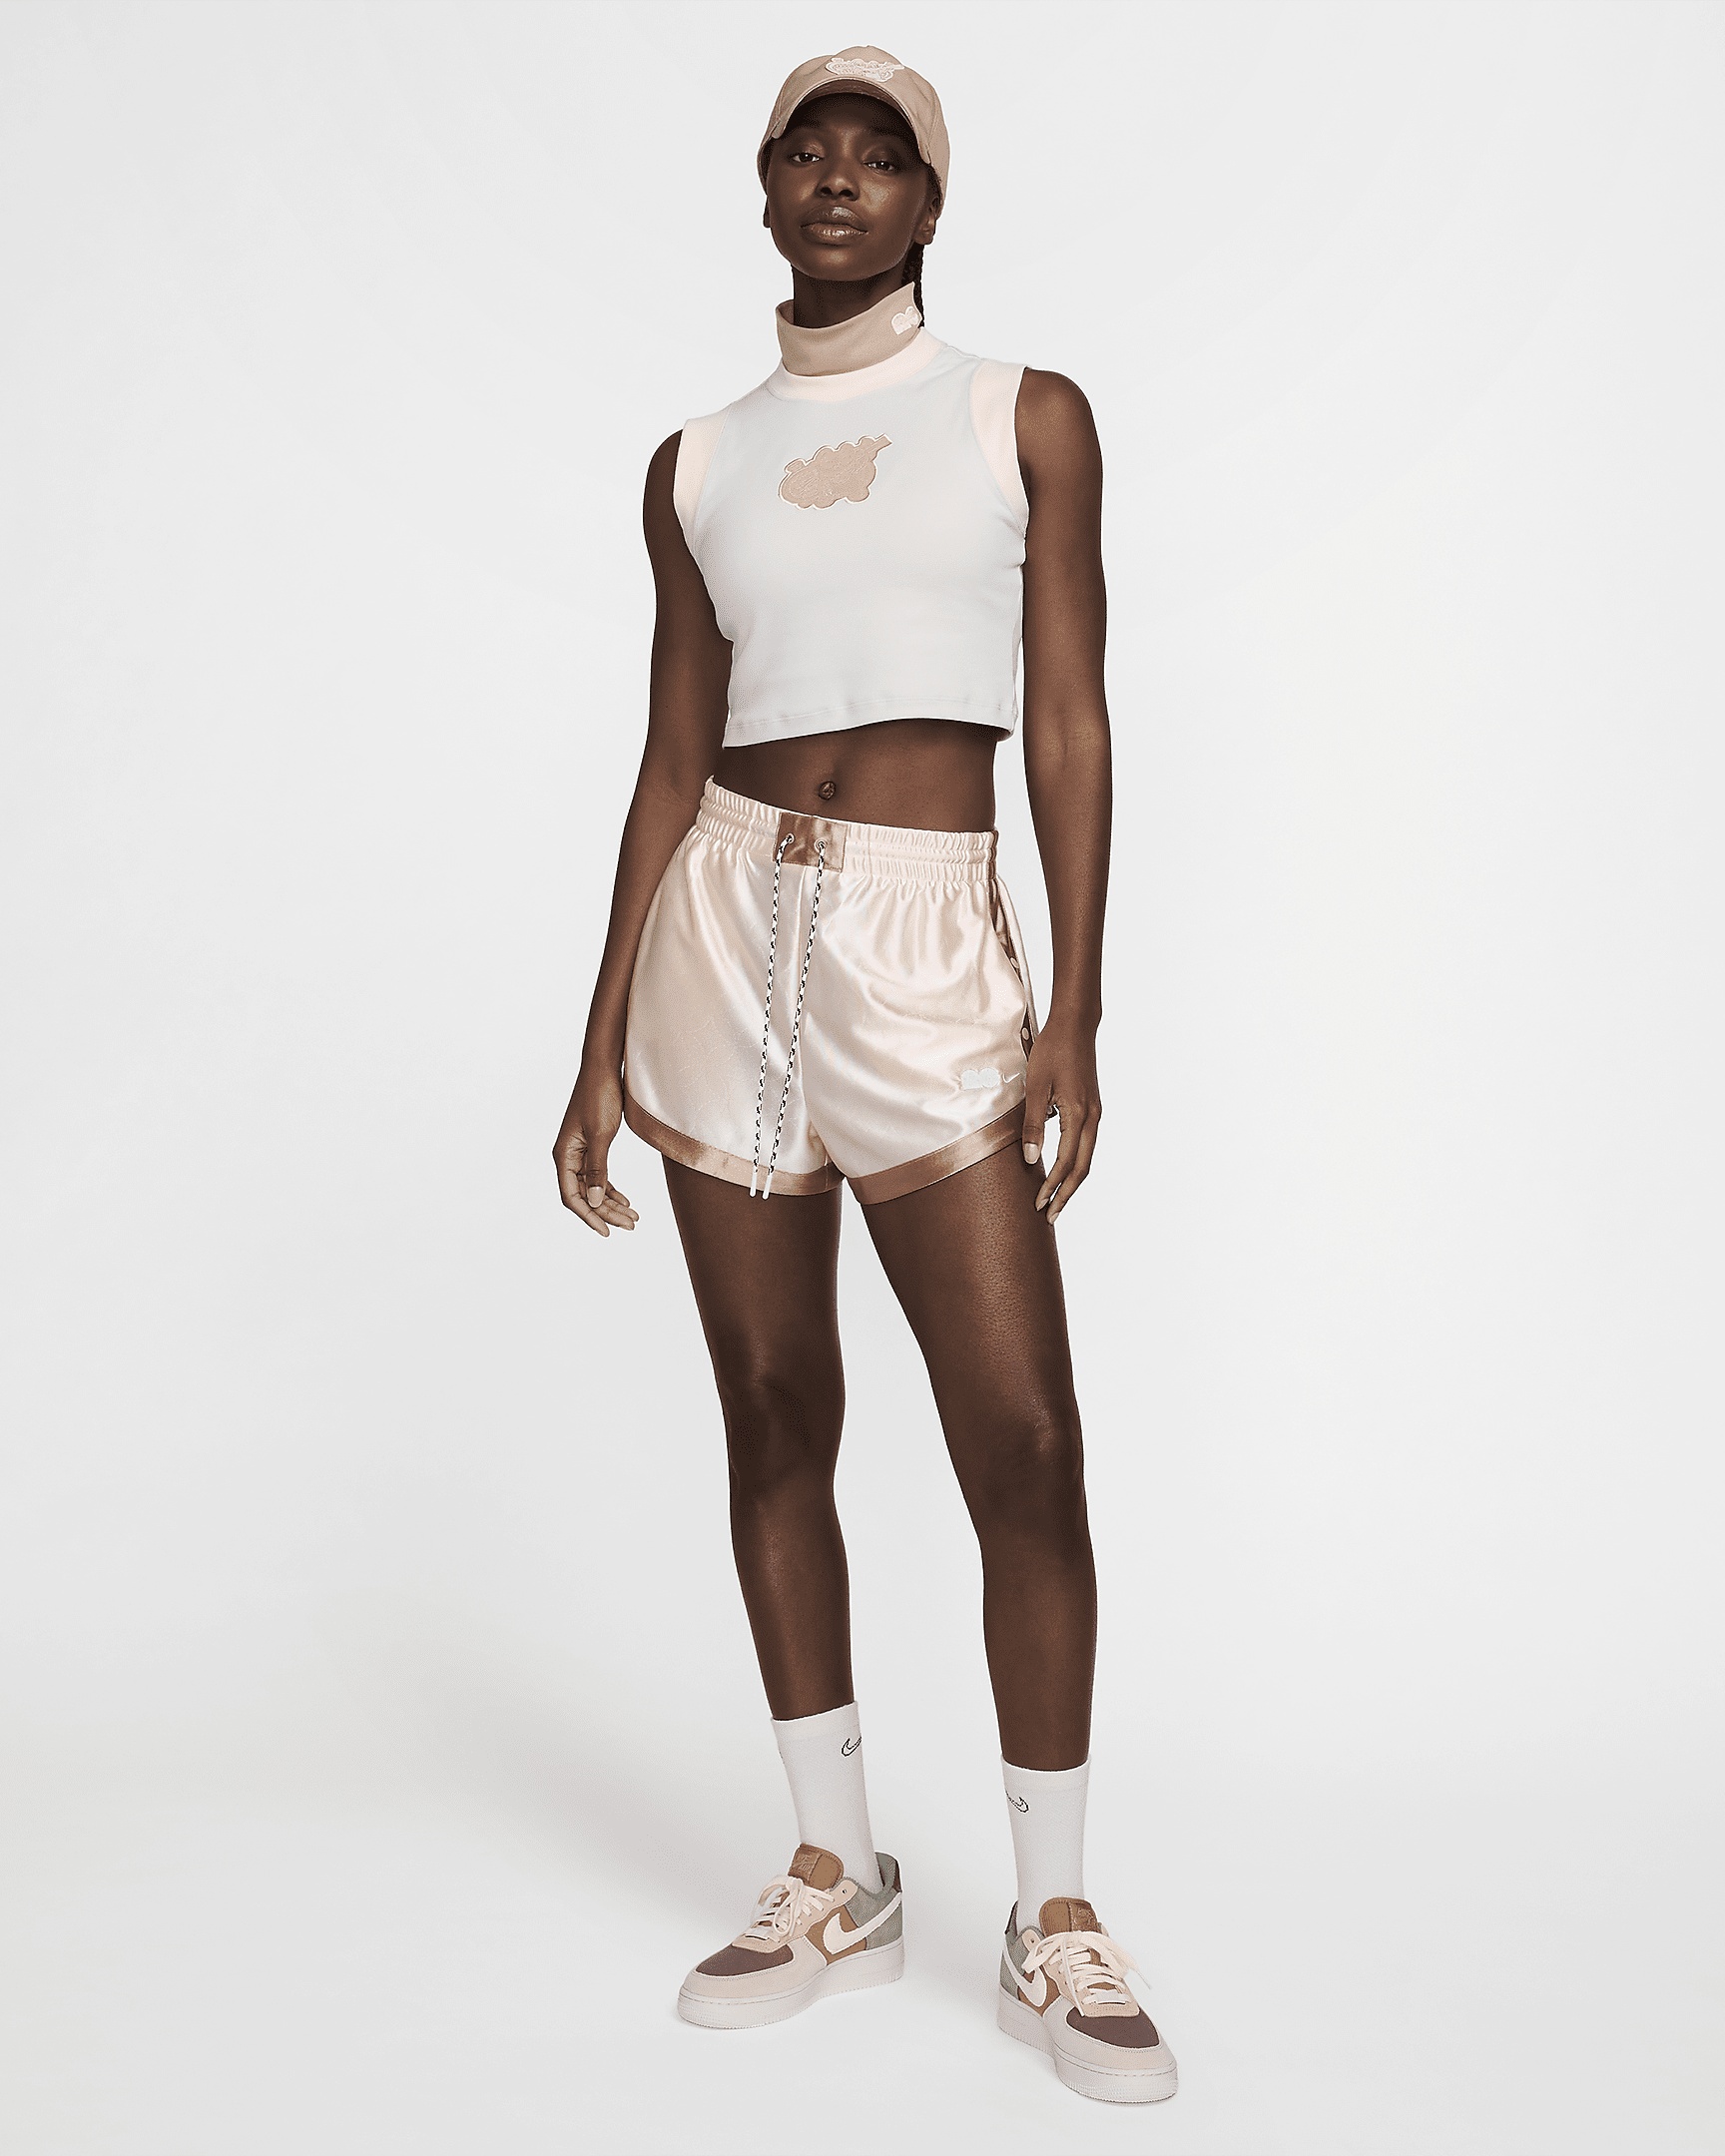 Nike Women's Naomi Osaka High-Waisted Breakaway Shorts - 6